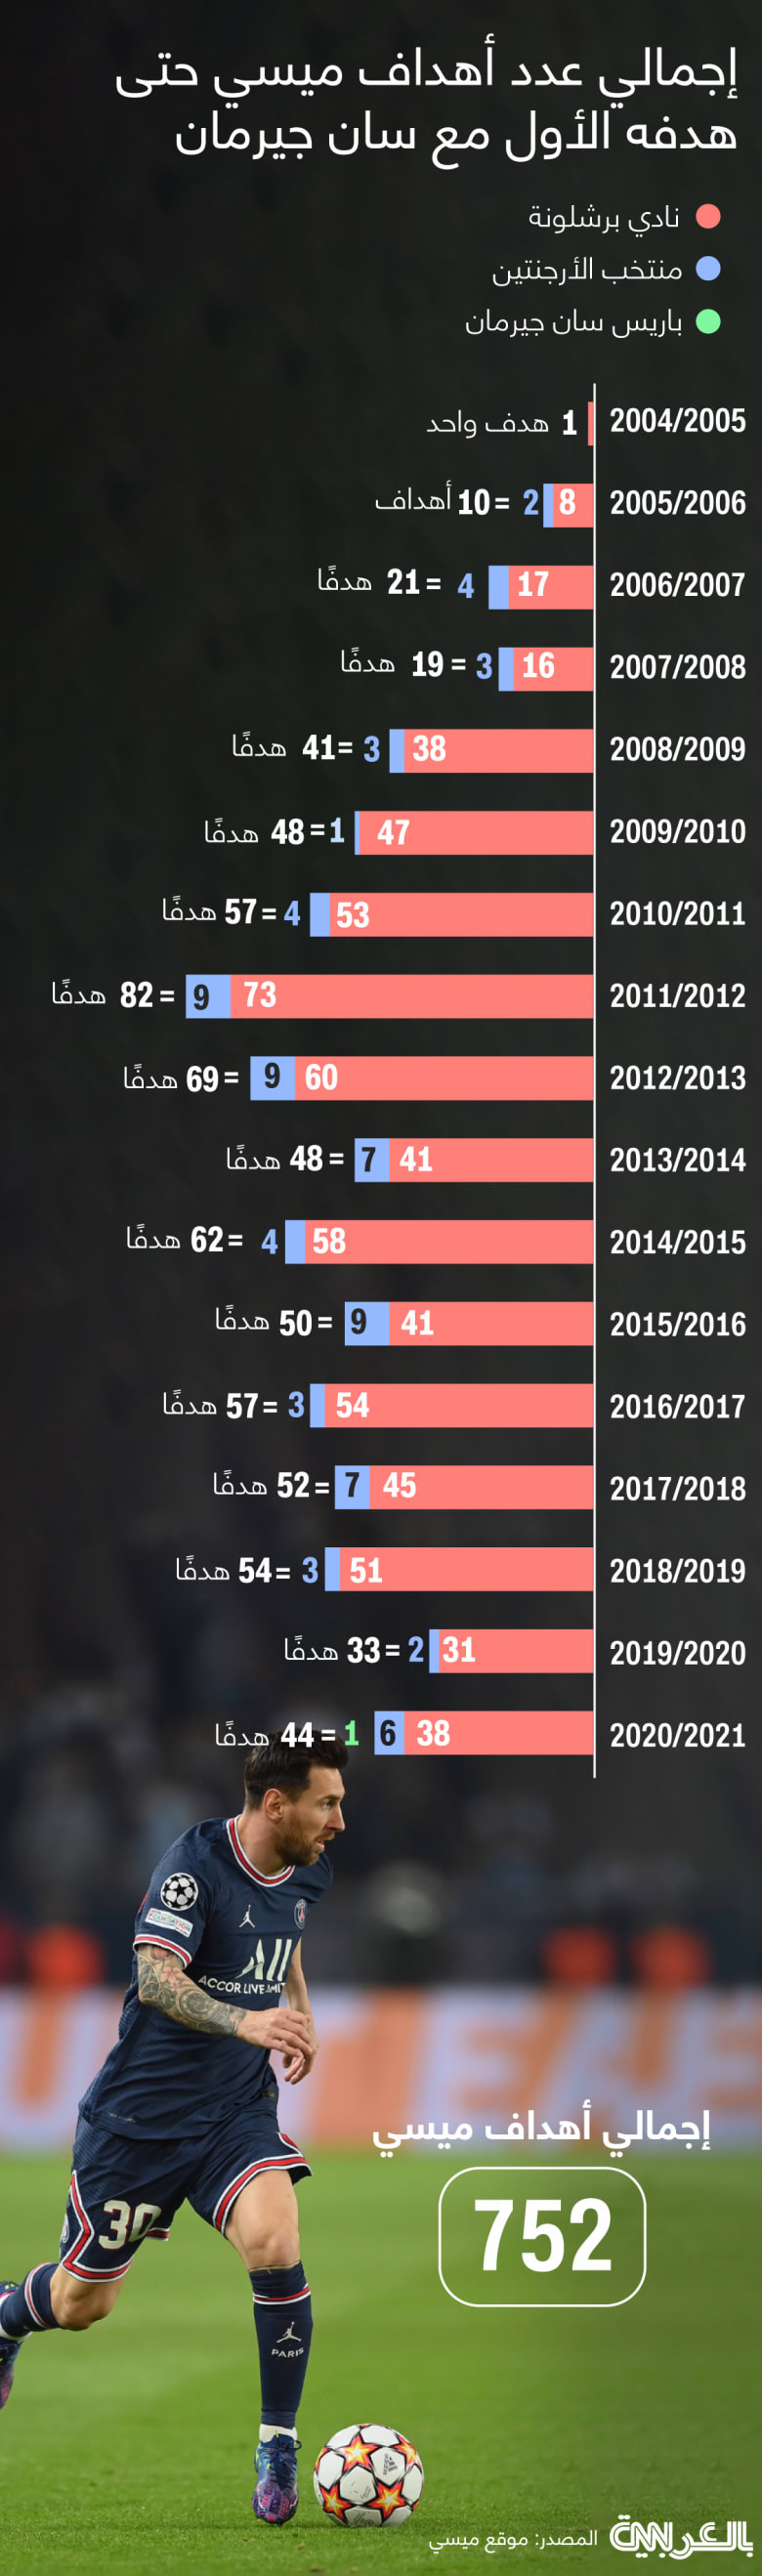 احصائيات ليفاندوفسكي 2021